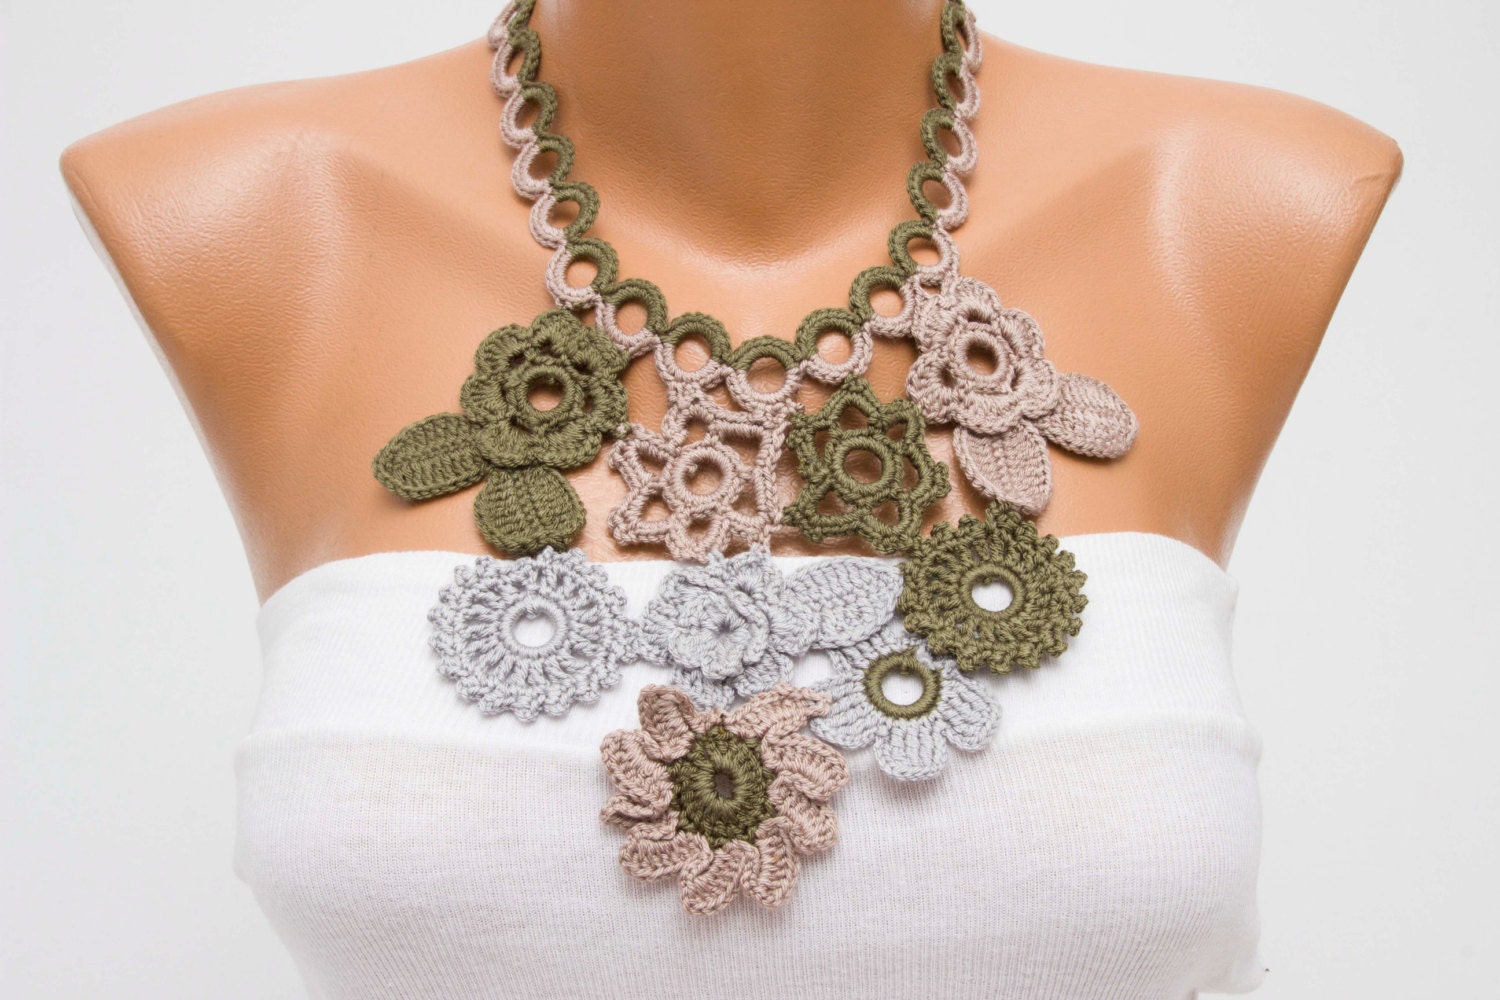 Statement necklace crochet jewelry crochet bip | Etsy